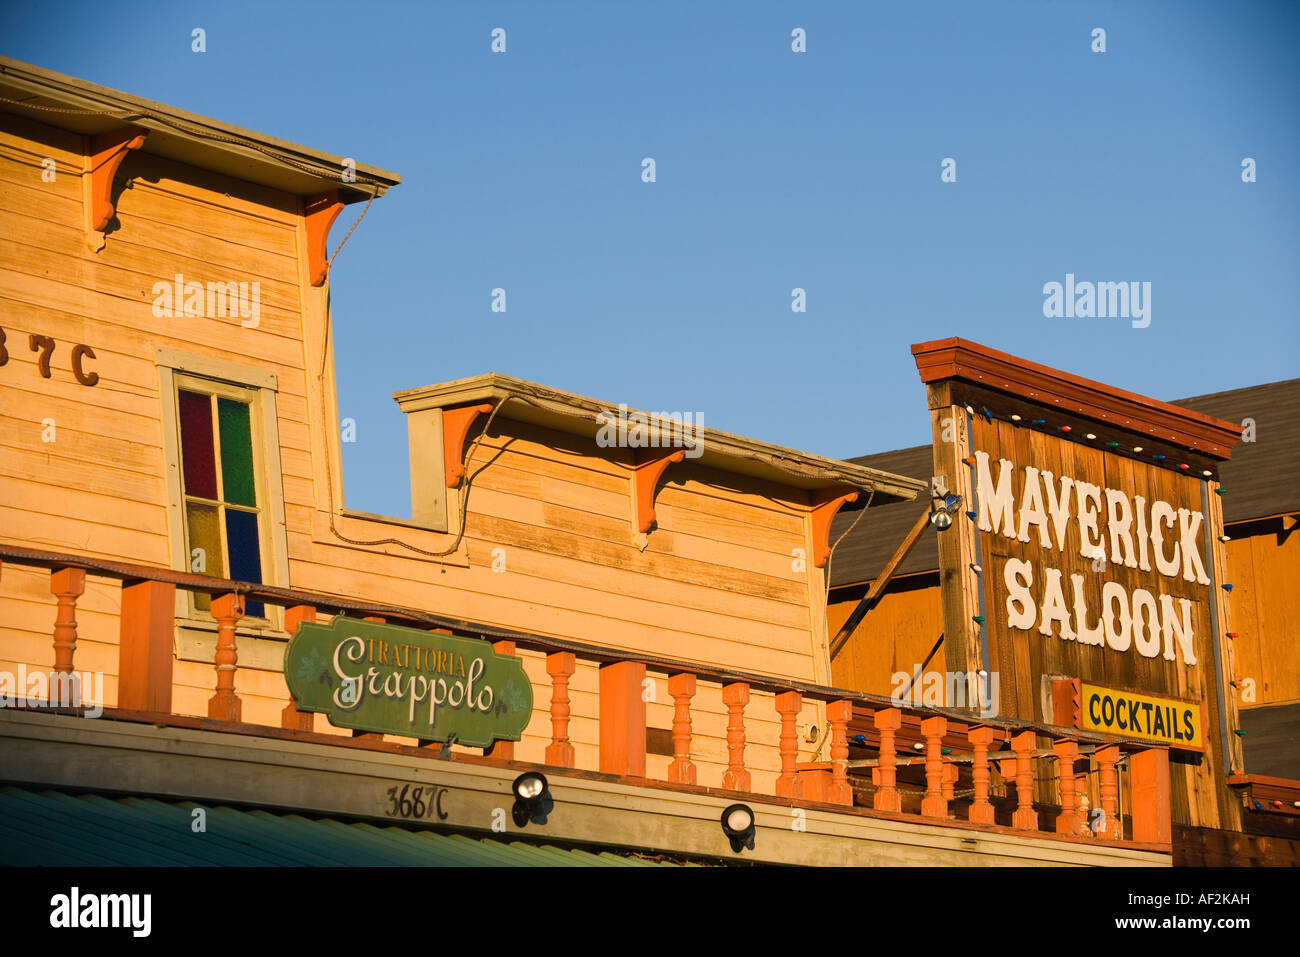 Trattoria Grappol and the Maverick Saloon Old Town Santa Ynez Santa Ynez Valley California Stock Photo